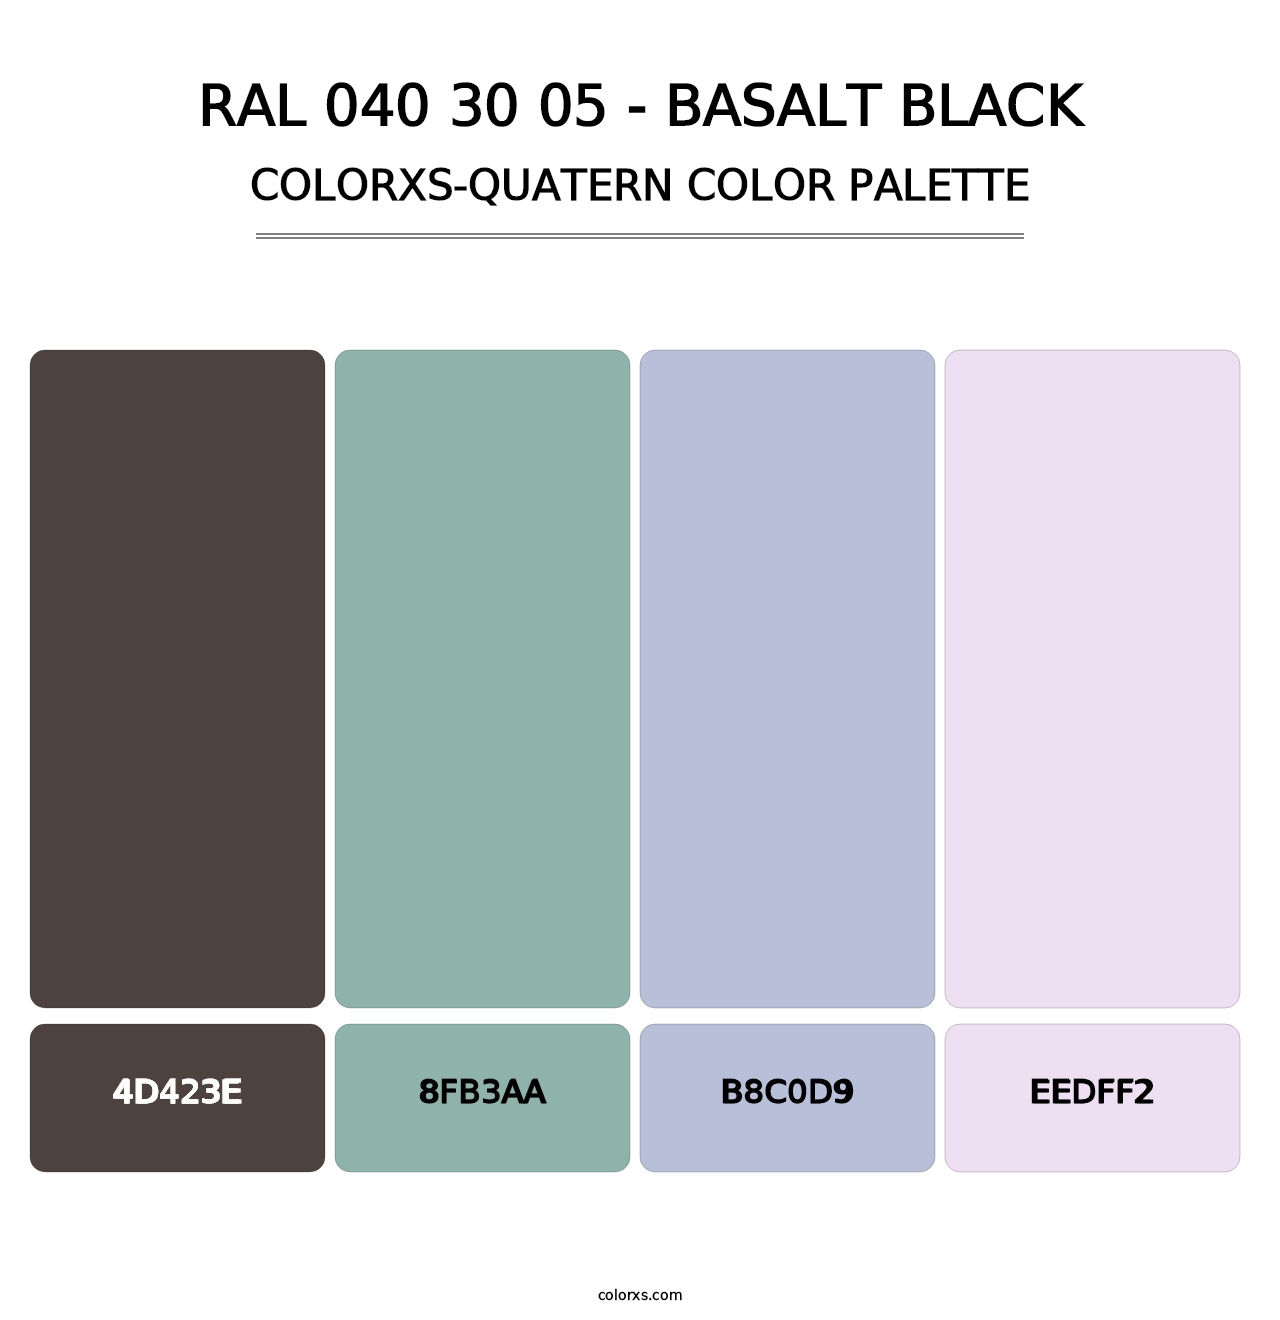 RAL 040 30 05 - Basalt Black - Colorxs Quatern Palette